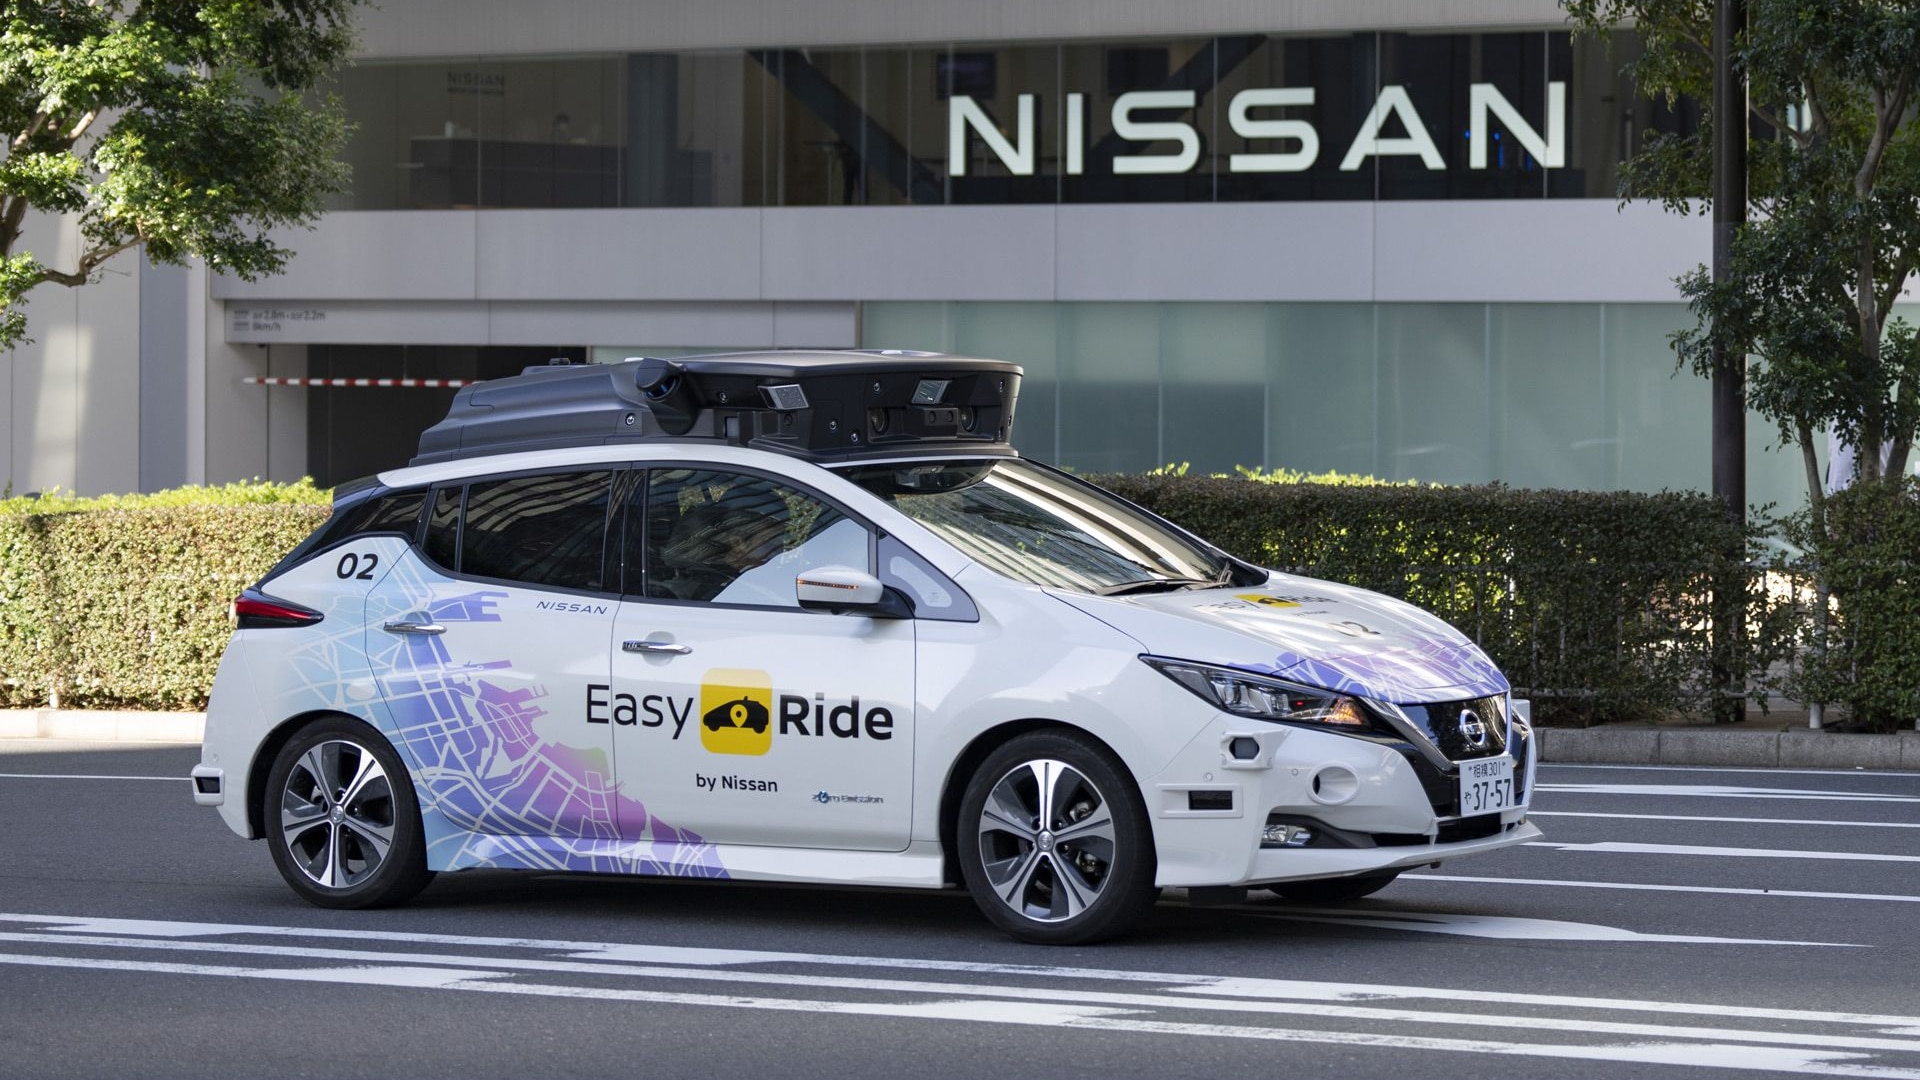 Nissan Easy Ride robotaxi prototype